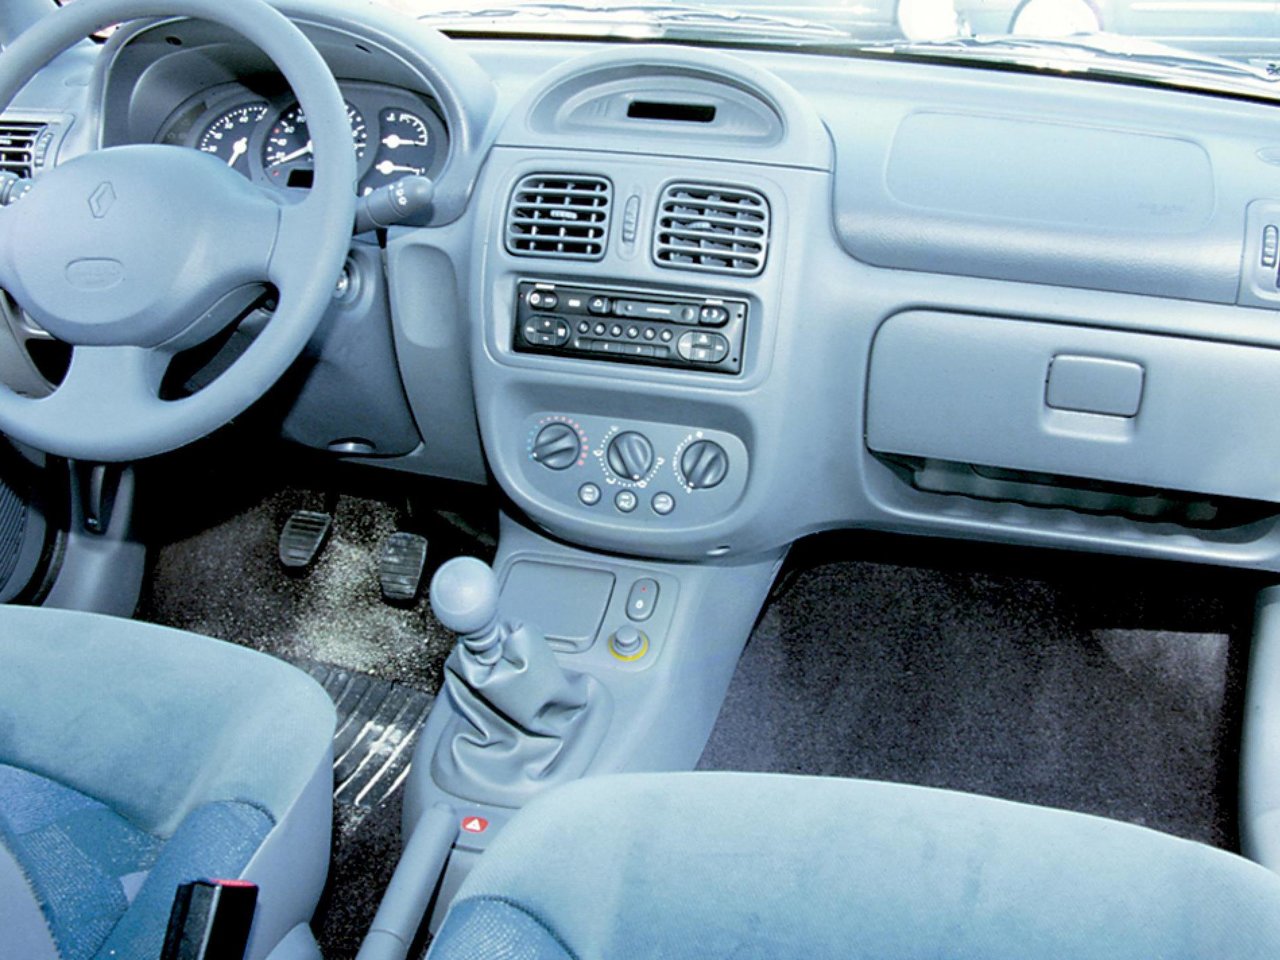 All photos, interior and exterior Renault Clio II 3 doors